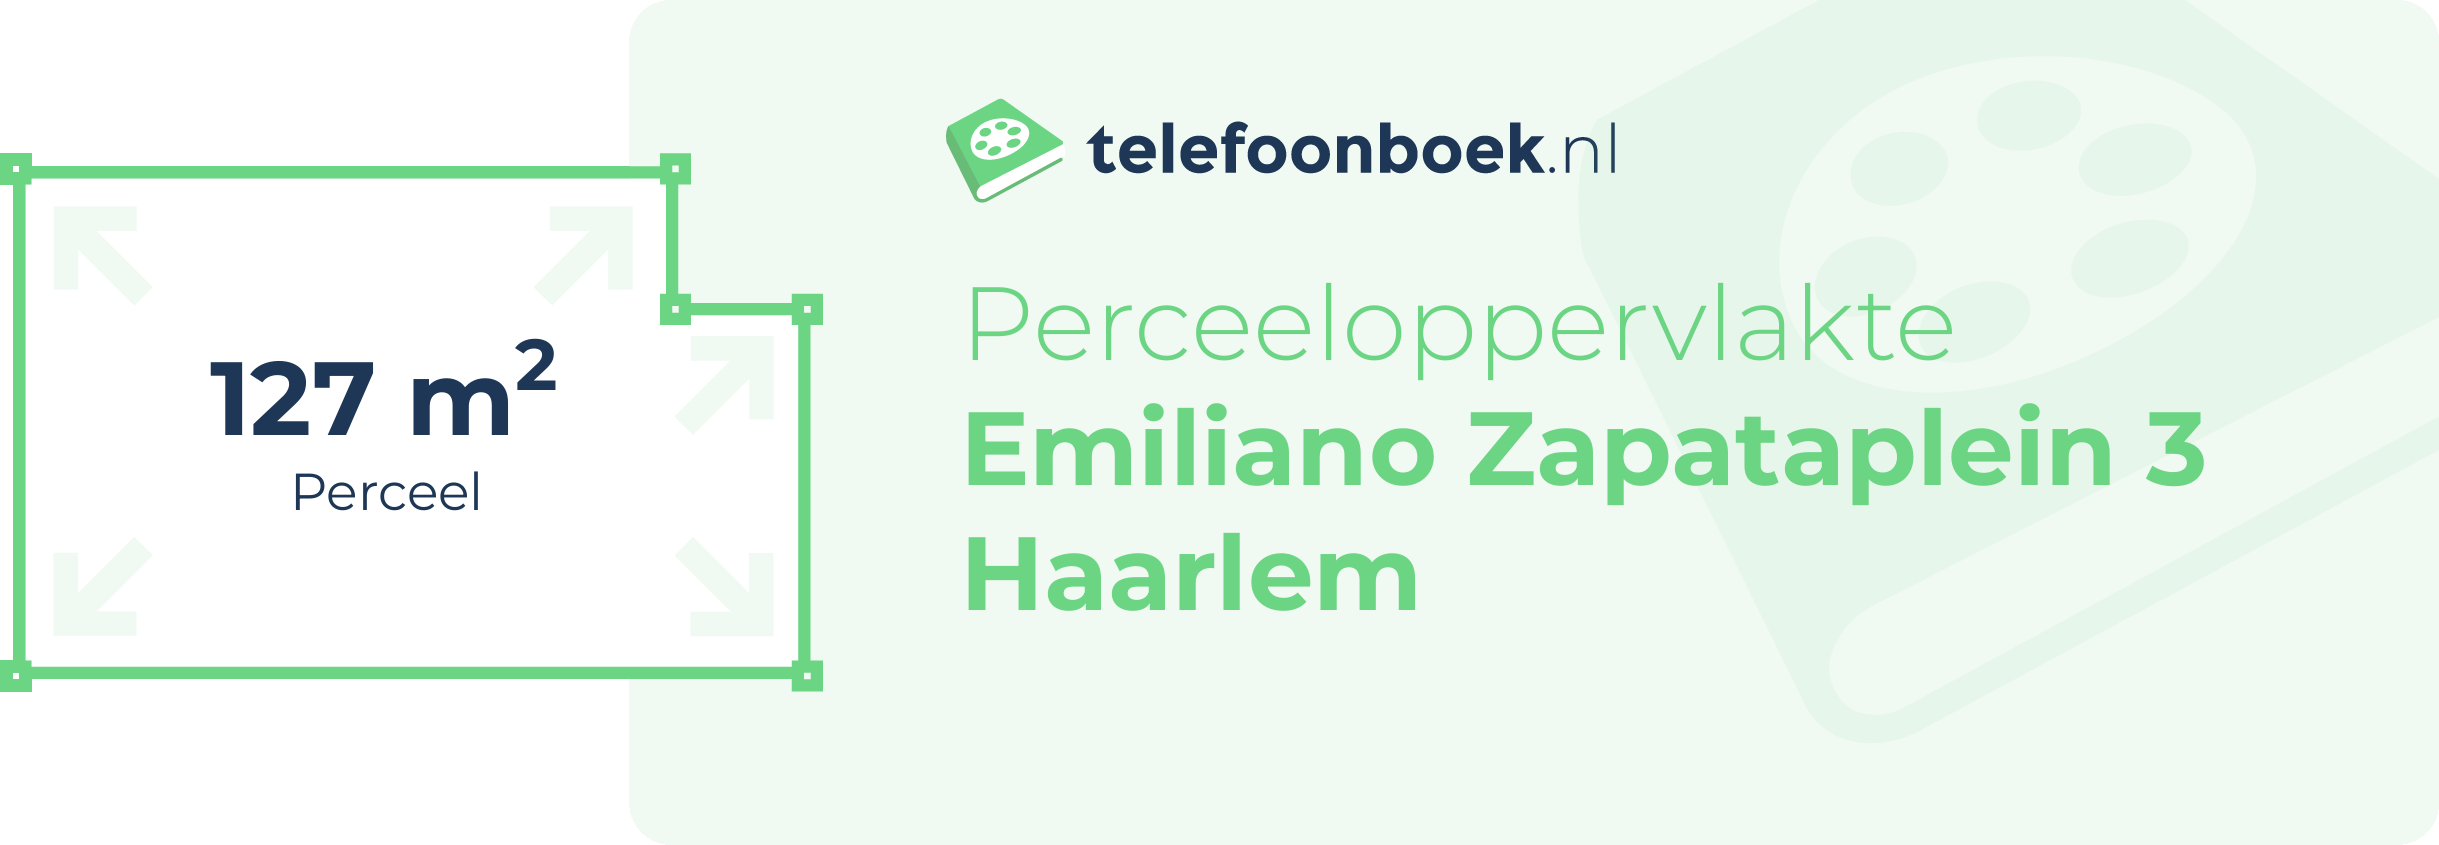 Perceeloppervlakte Emiliano Zapataplein 3 Haarlem